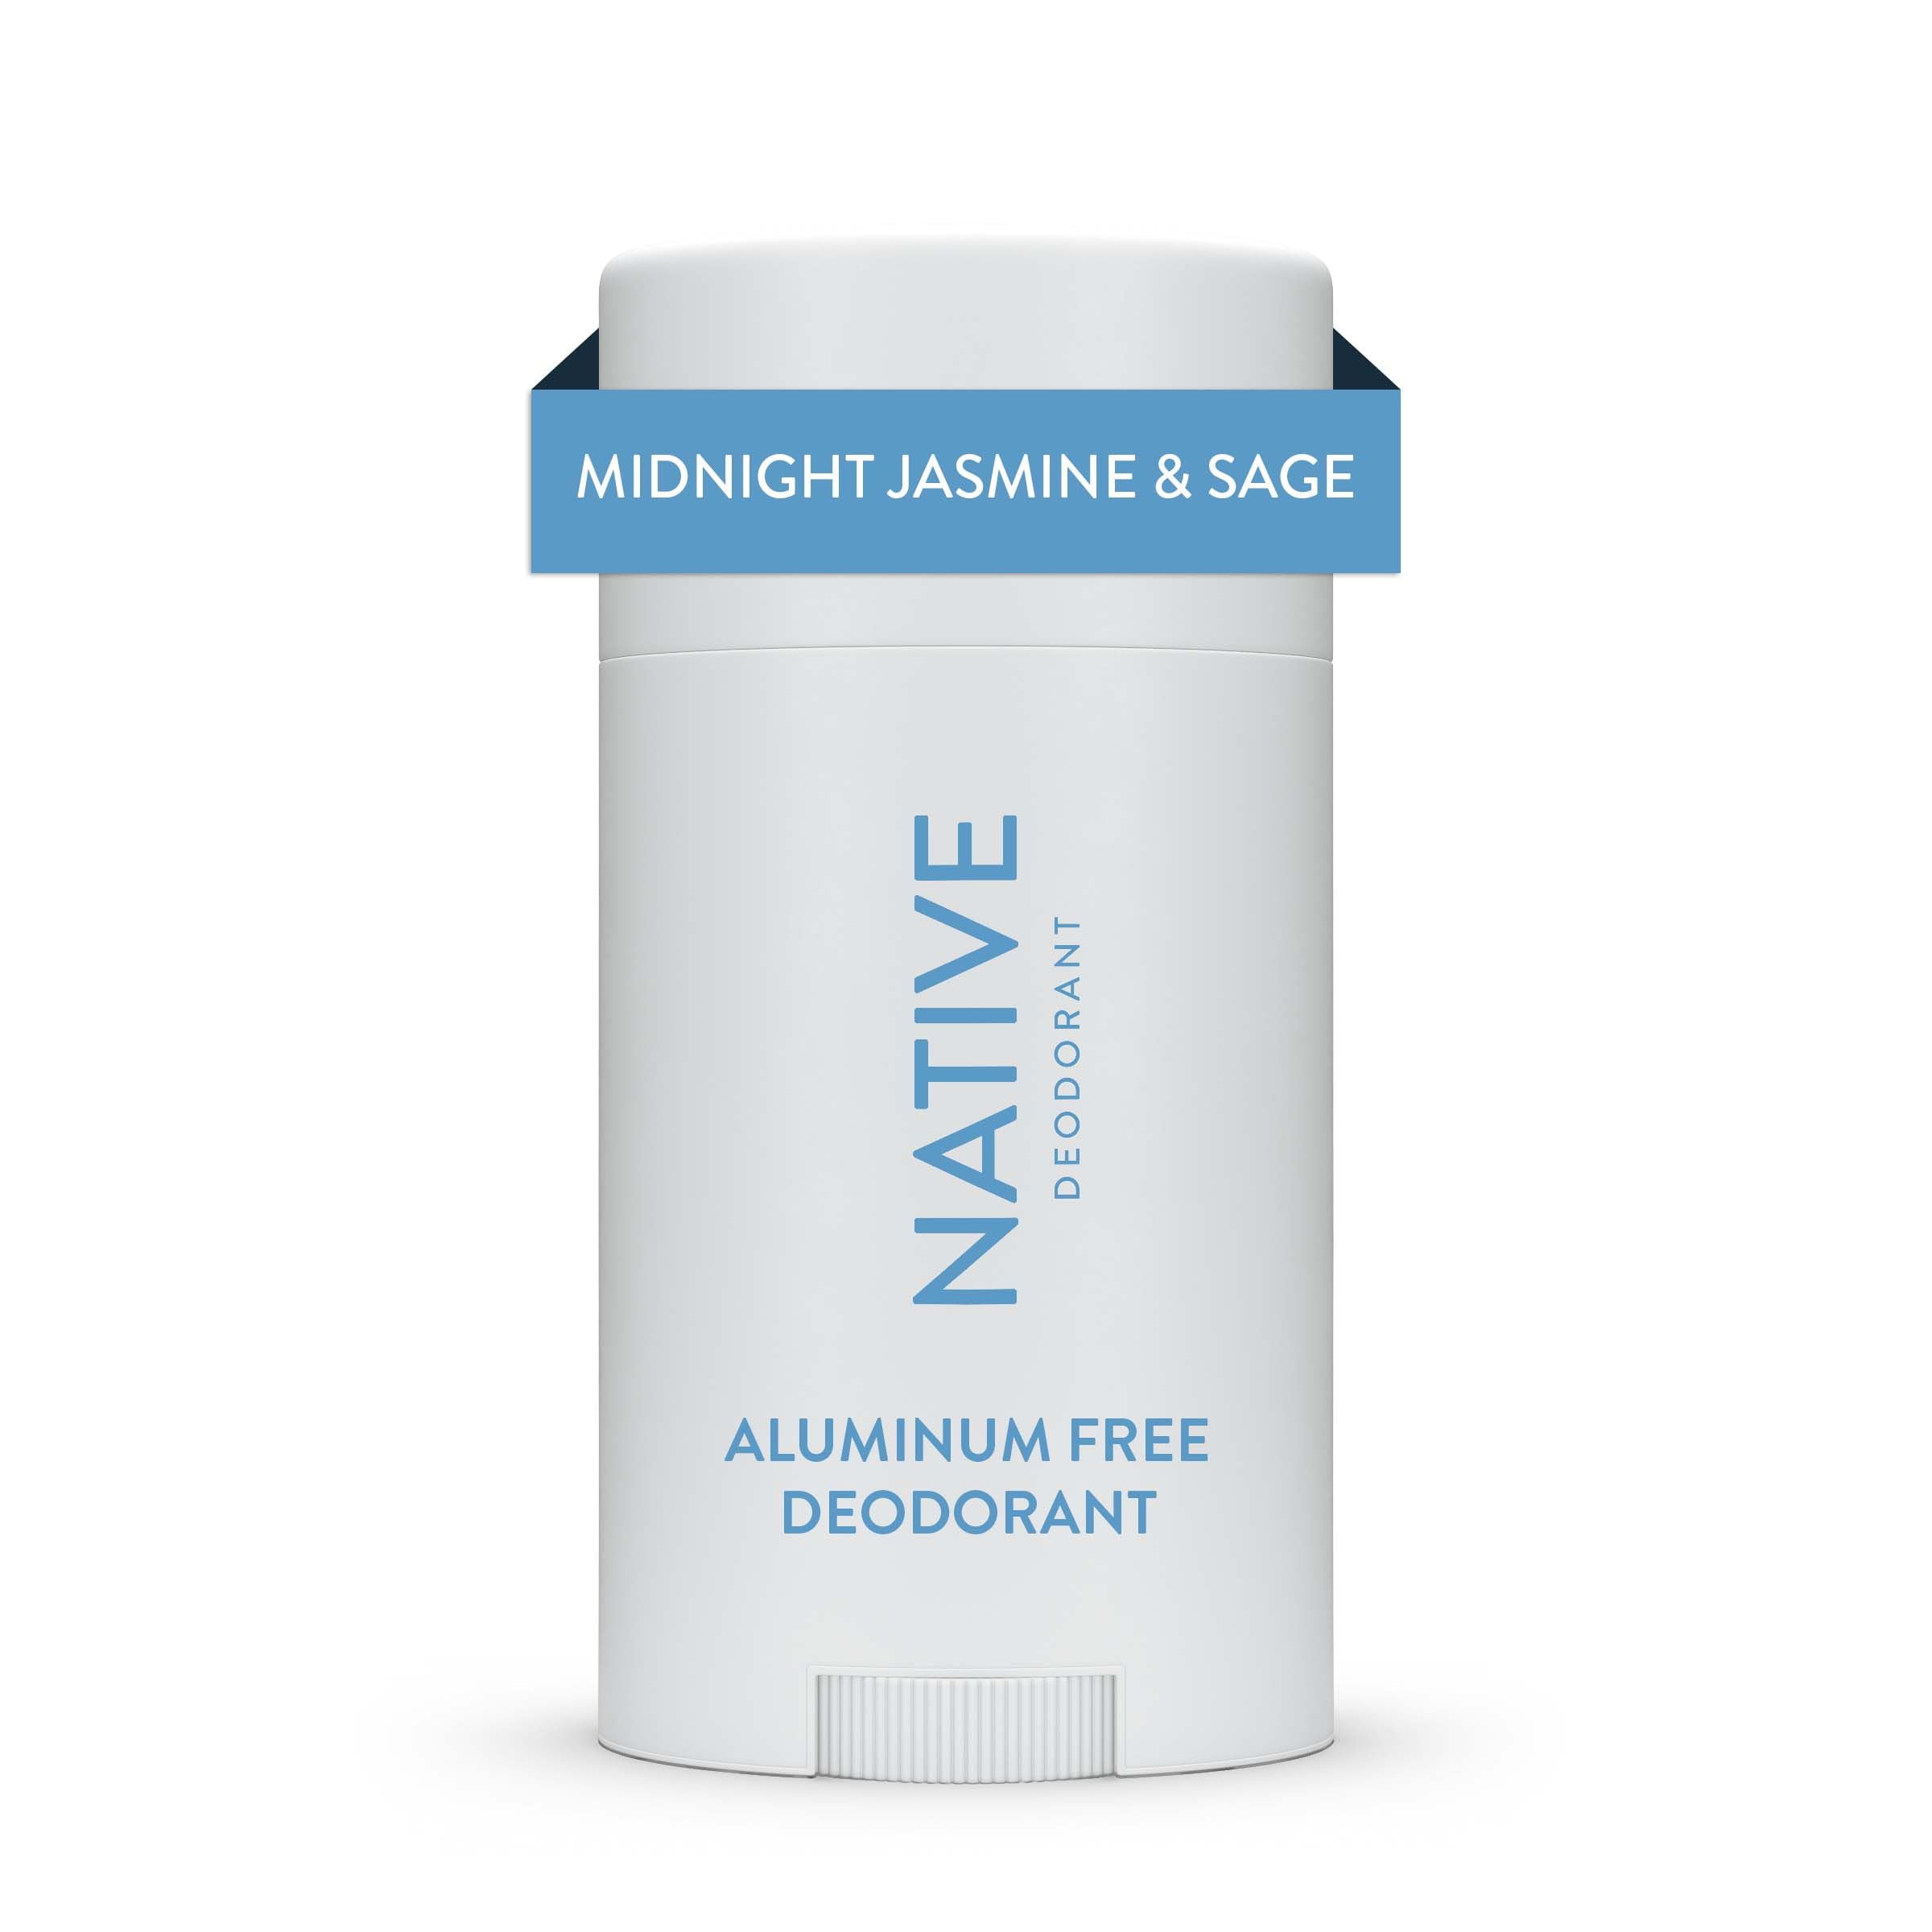 Native Deodorant, Midnight Jasmine & Sage, Aluminum Free, Sulfate Free, Paraben Free 2.65 oz